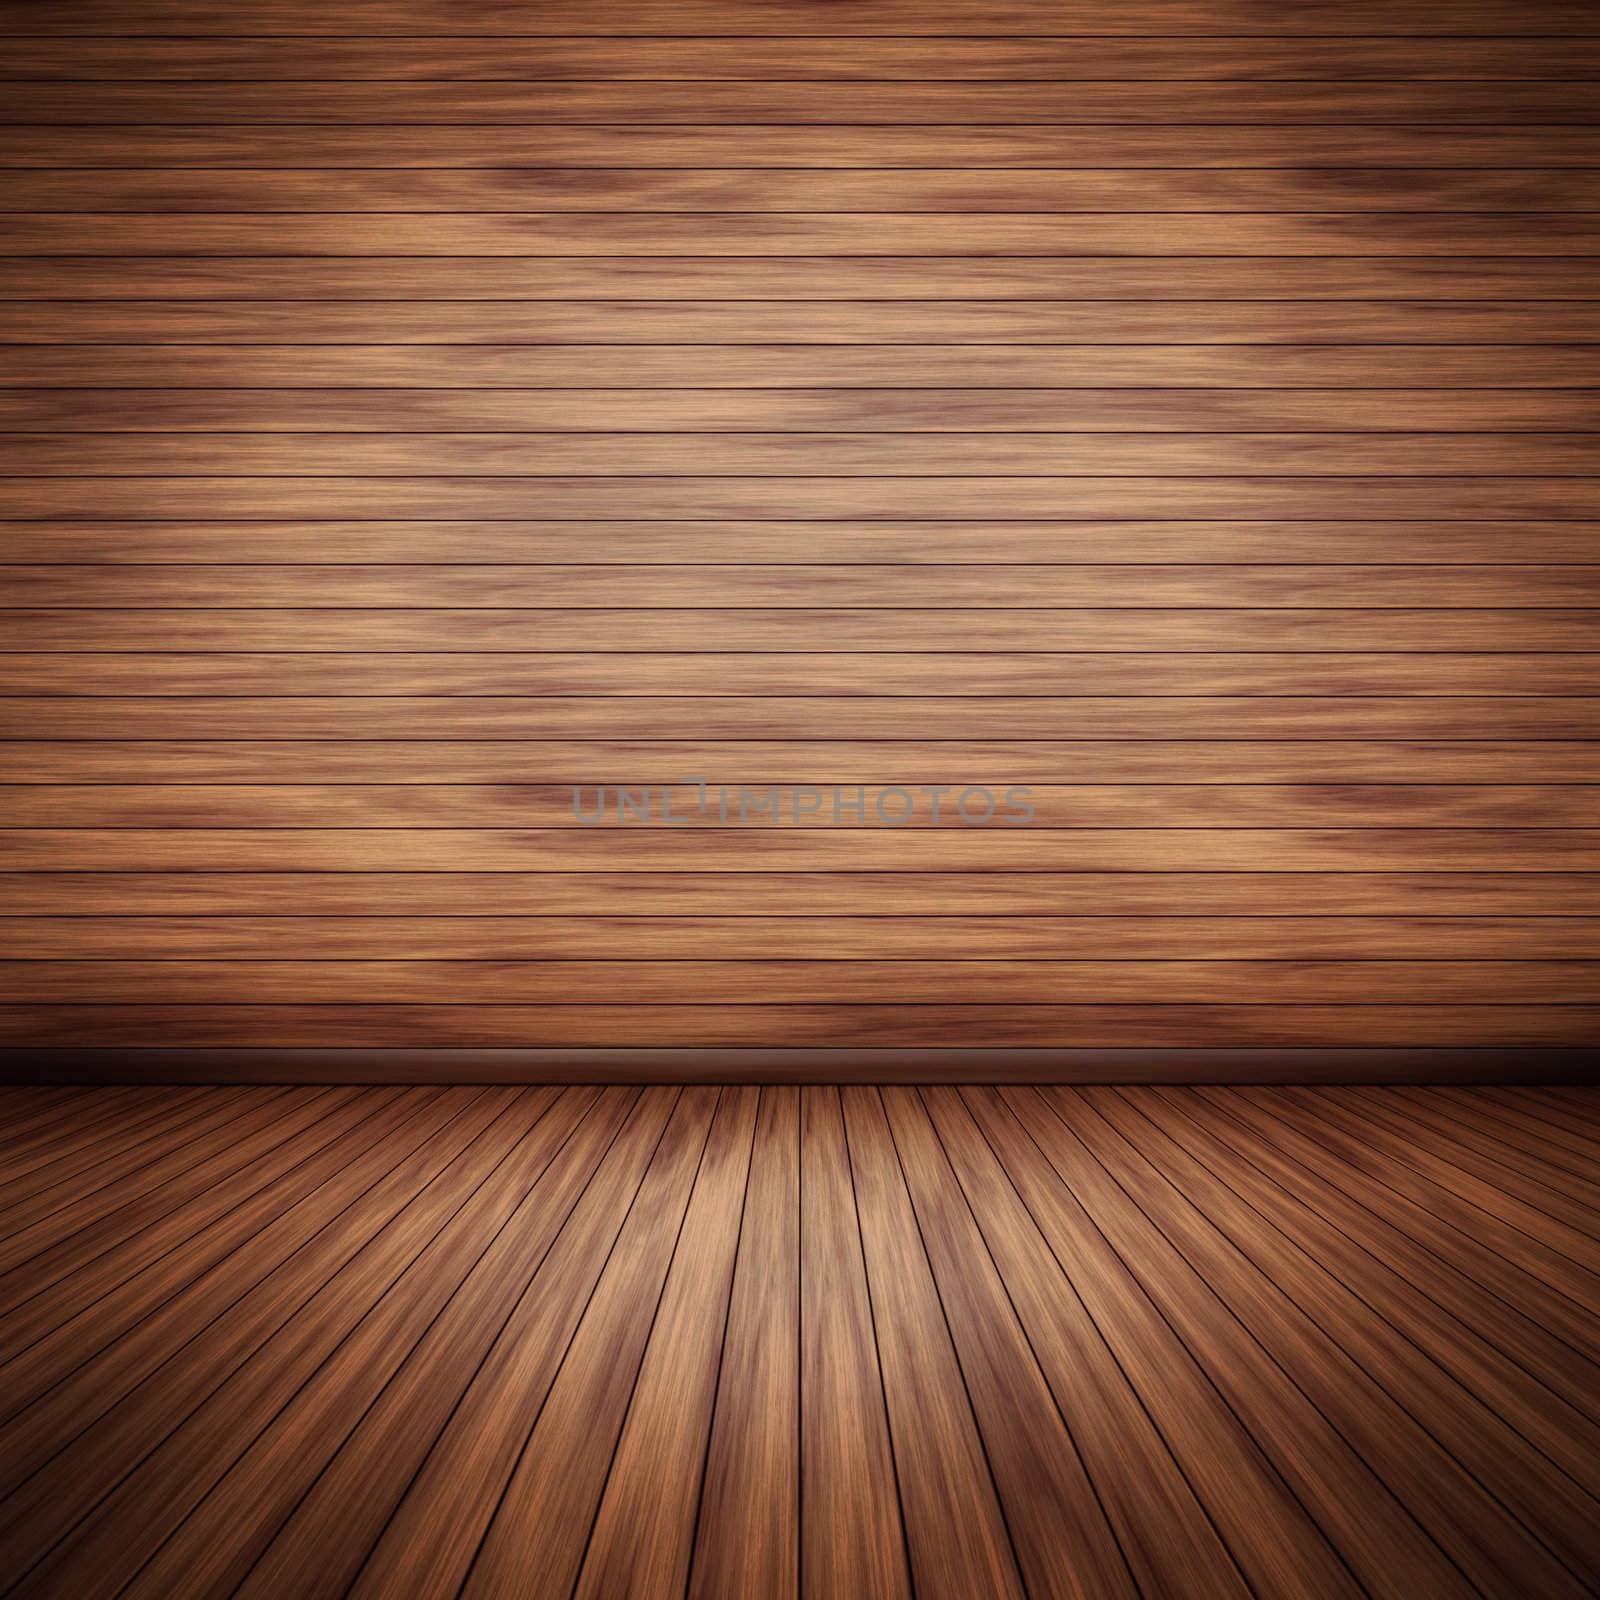 wooden floor by magann